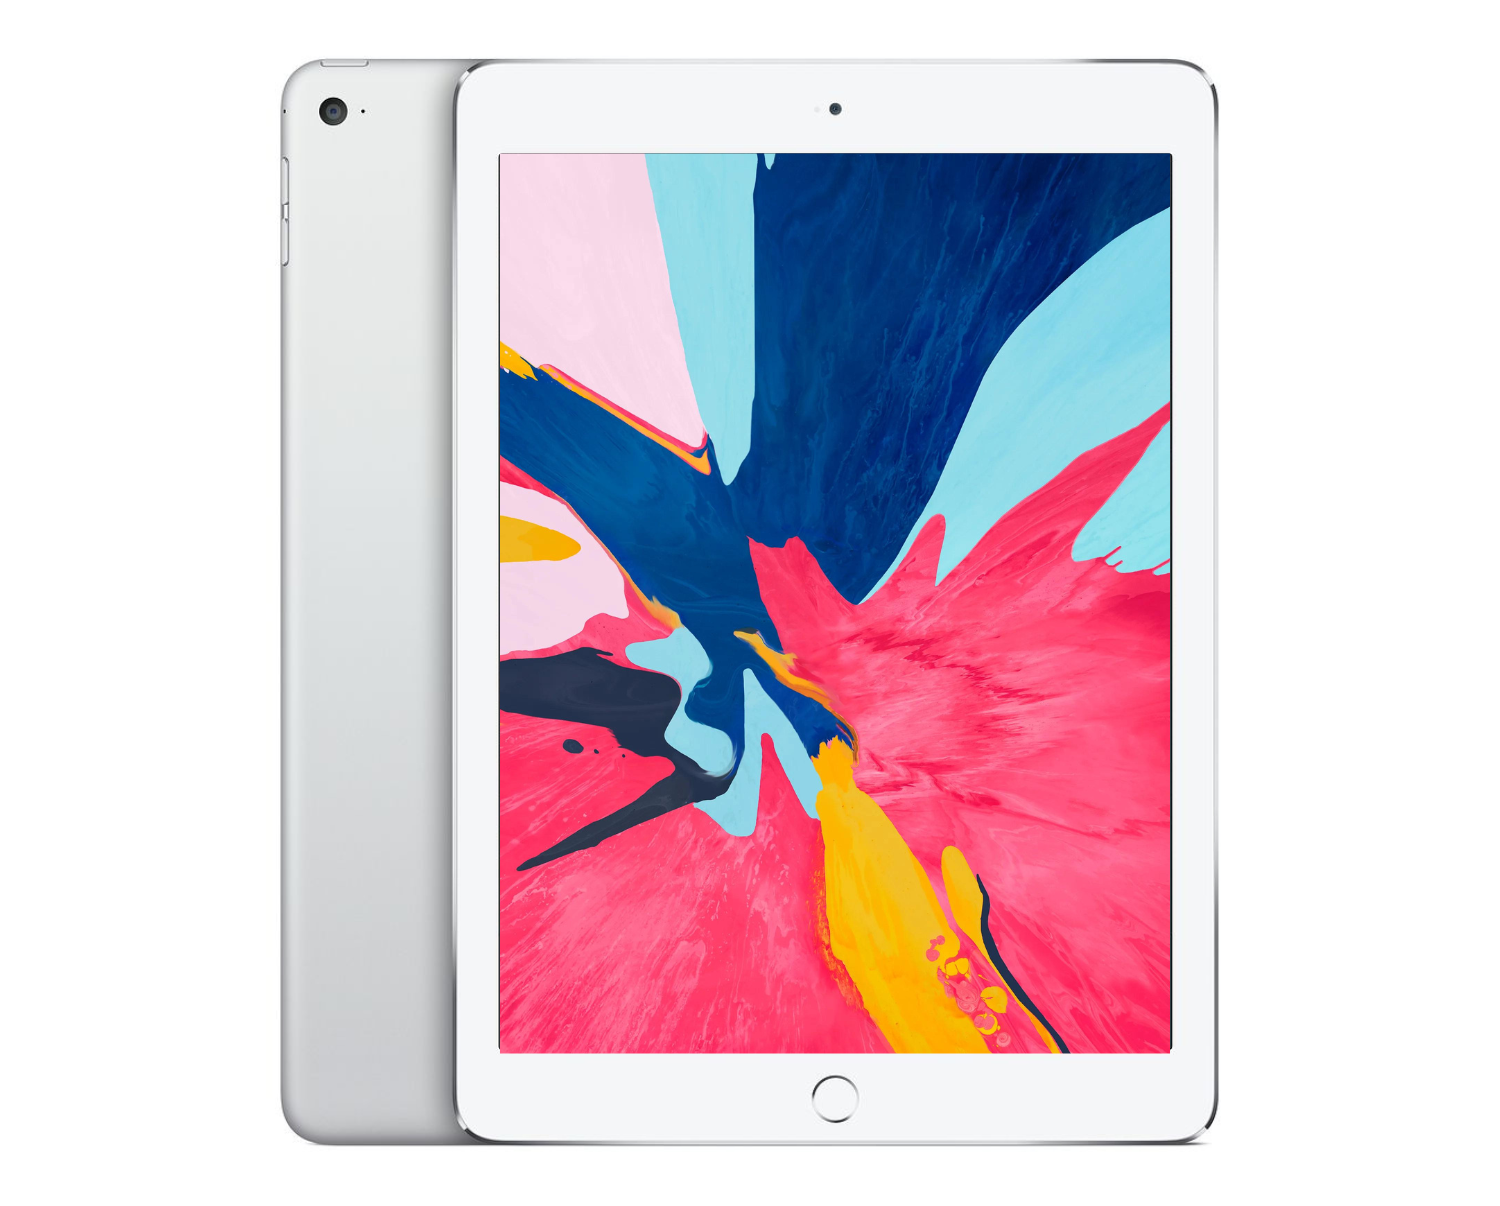 Apple iPad Air 2 16GB WiFi A1566 Space Grey at Affordable Mac